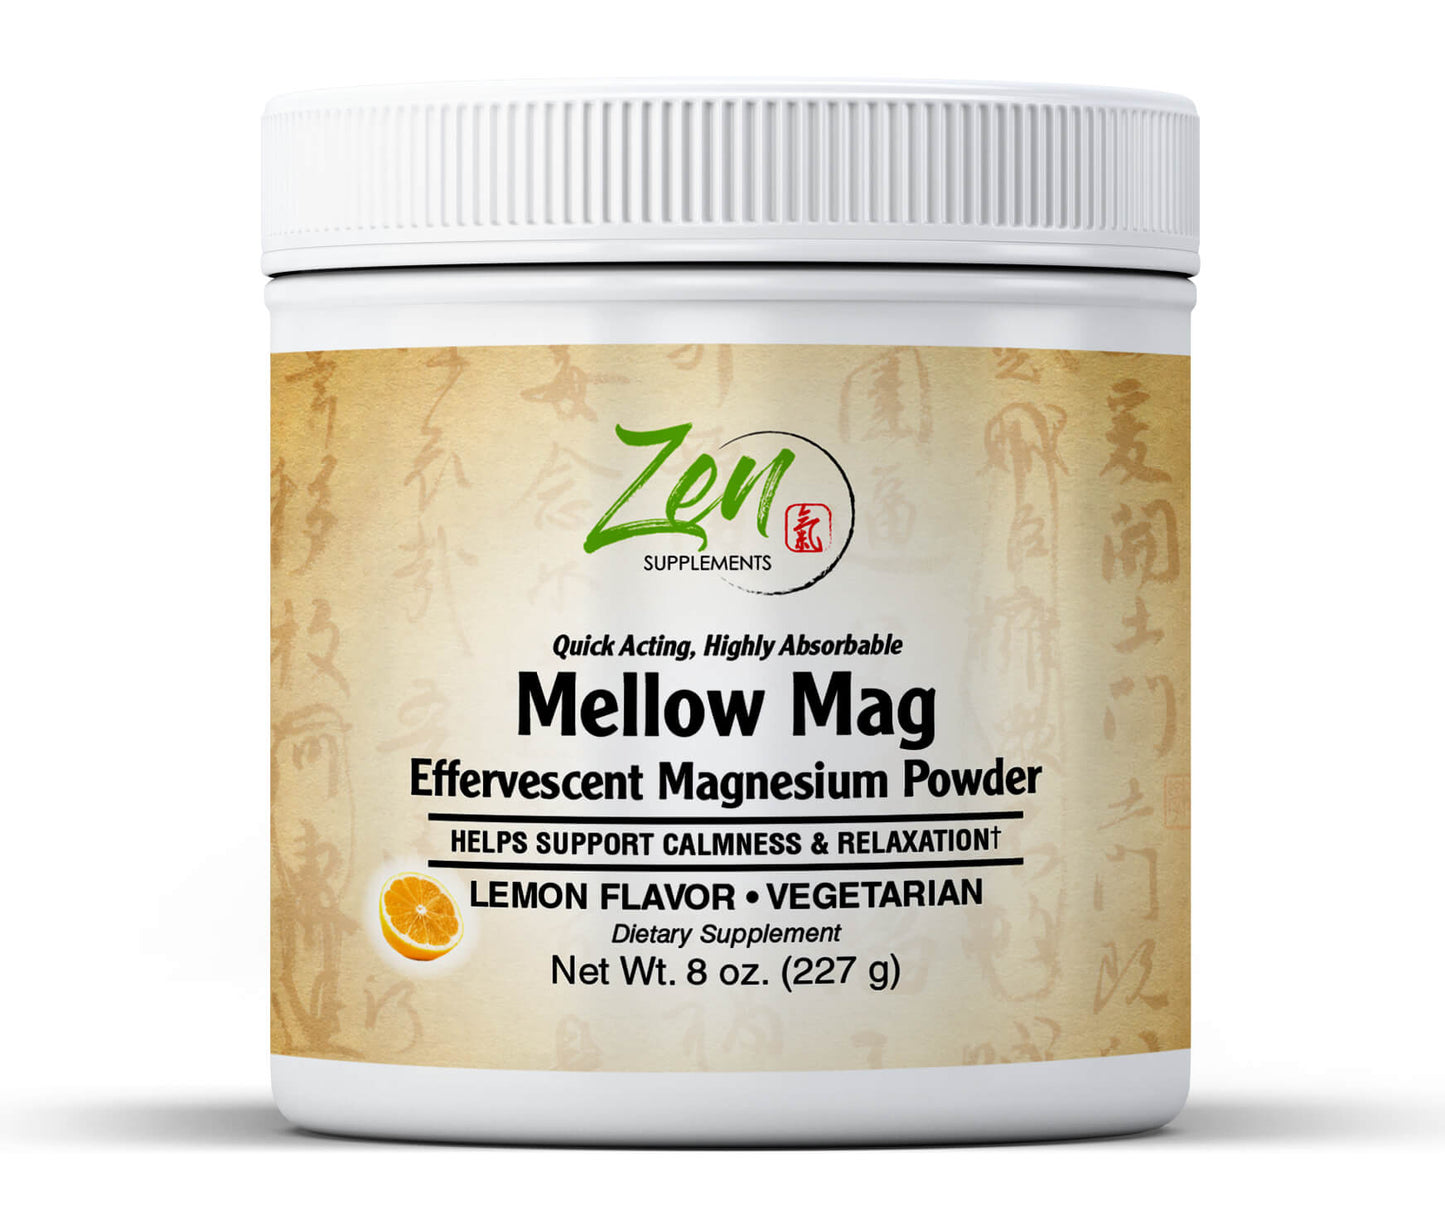 Mellow Mag-Lemon Flavor Magnesium Carbonate - 8oz